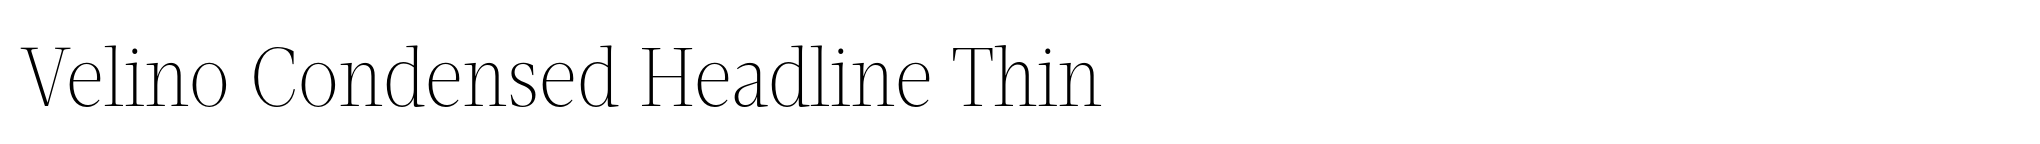 Velino Condensed Headline Thin image